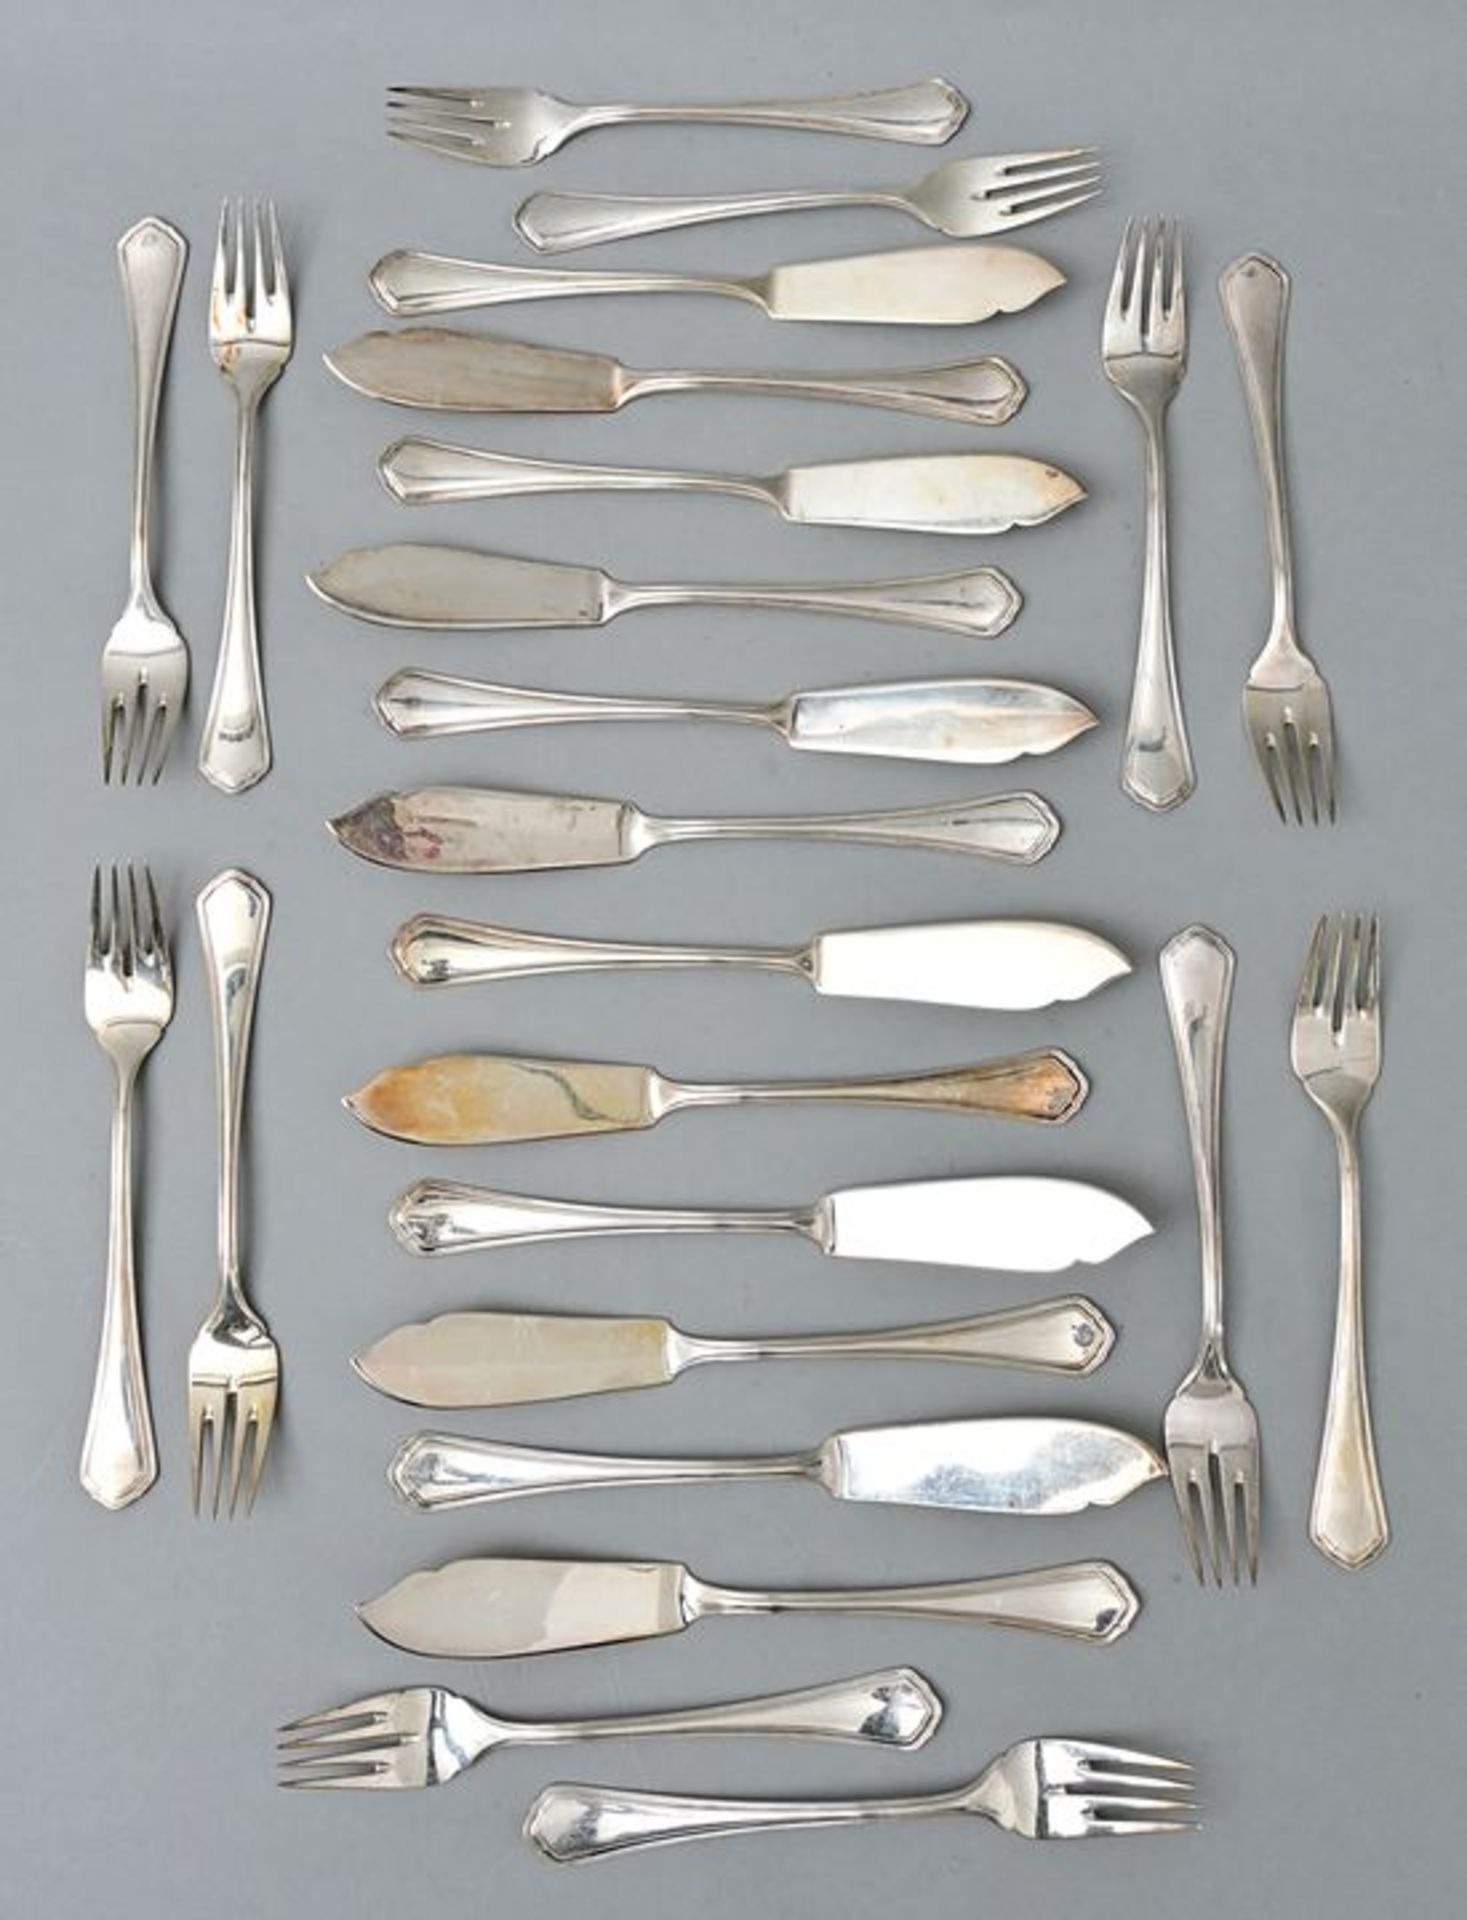 Fischbesteck/ fish cutlery